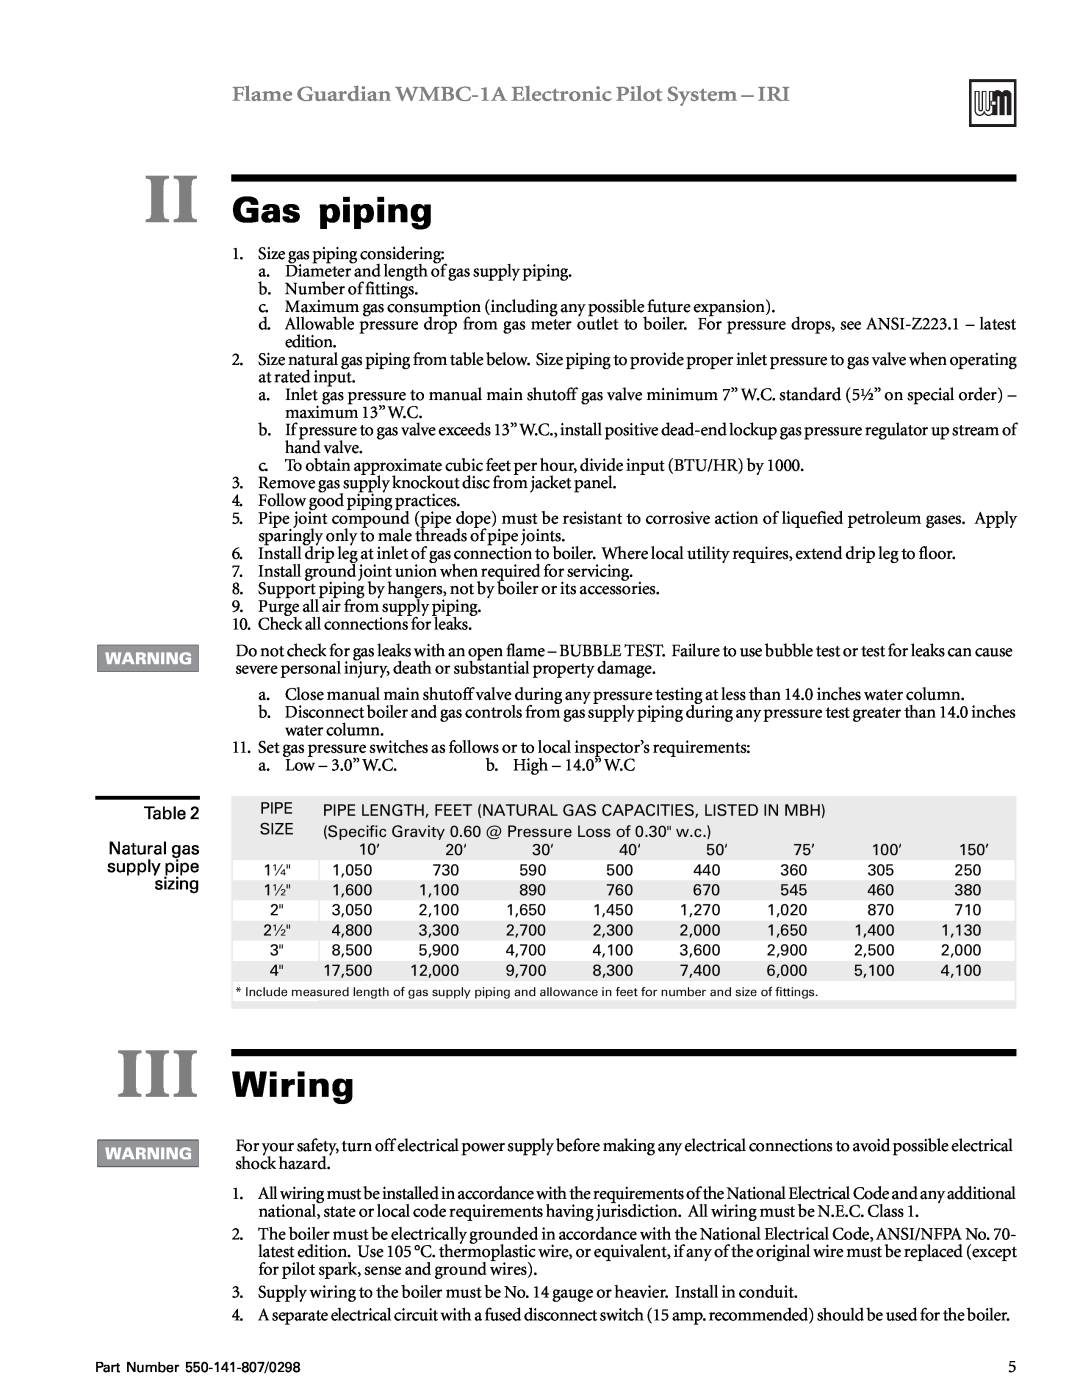 Weil-McLain WMBC-1A manual Gas piping, III Wiring 